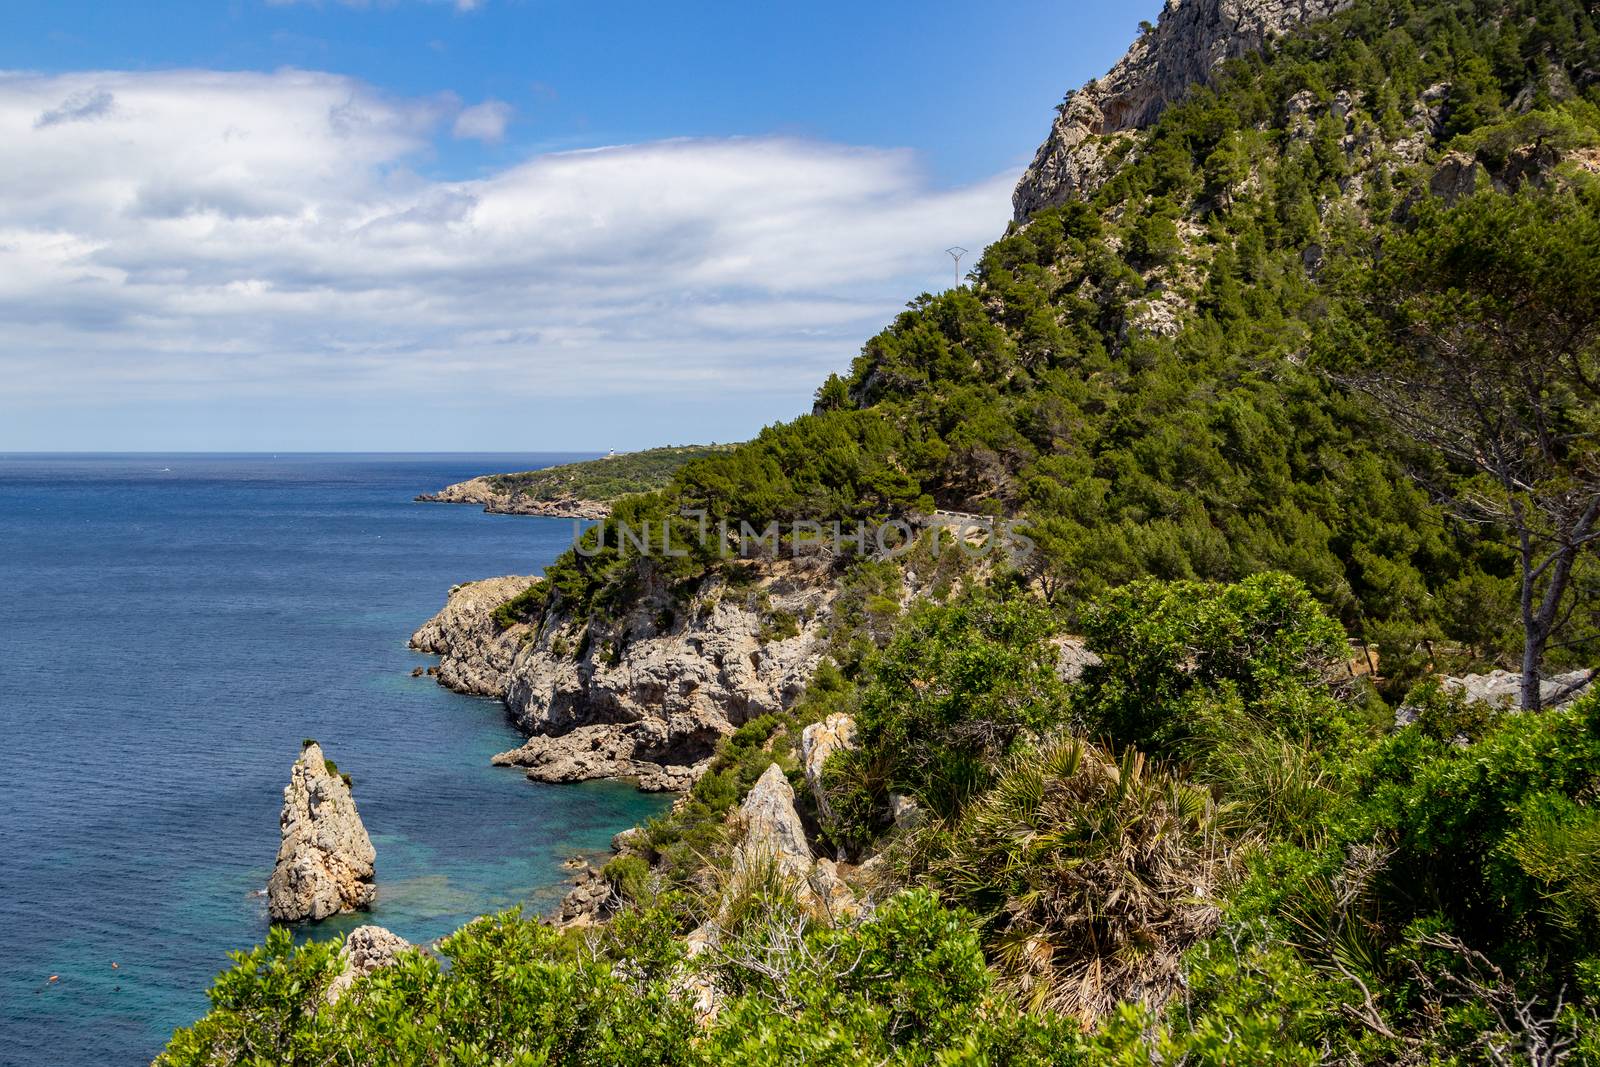 Peninsula La Victoria at Baleares island Mallorca by reinerc